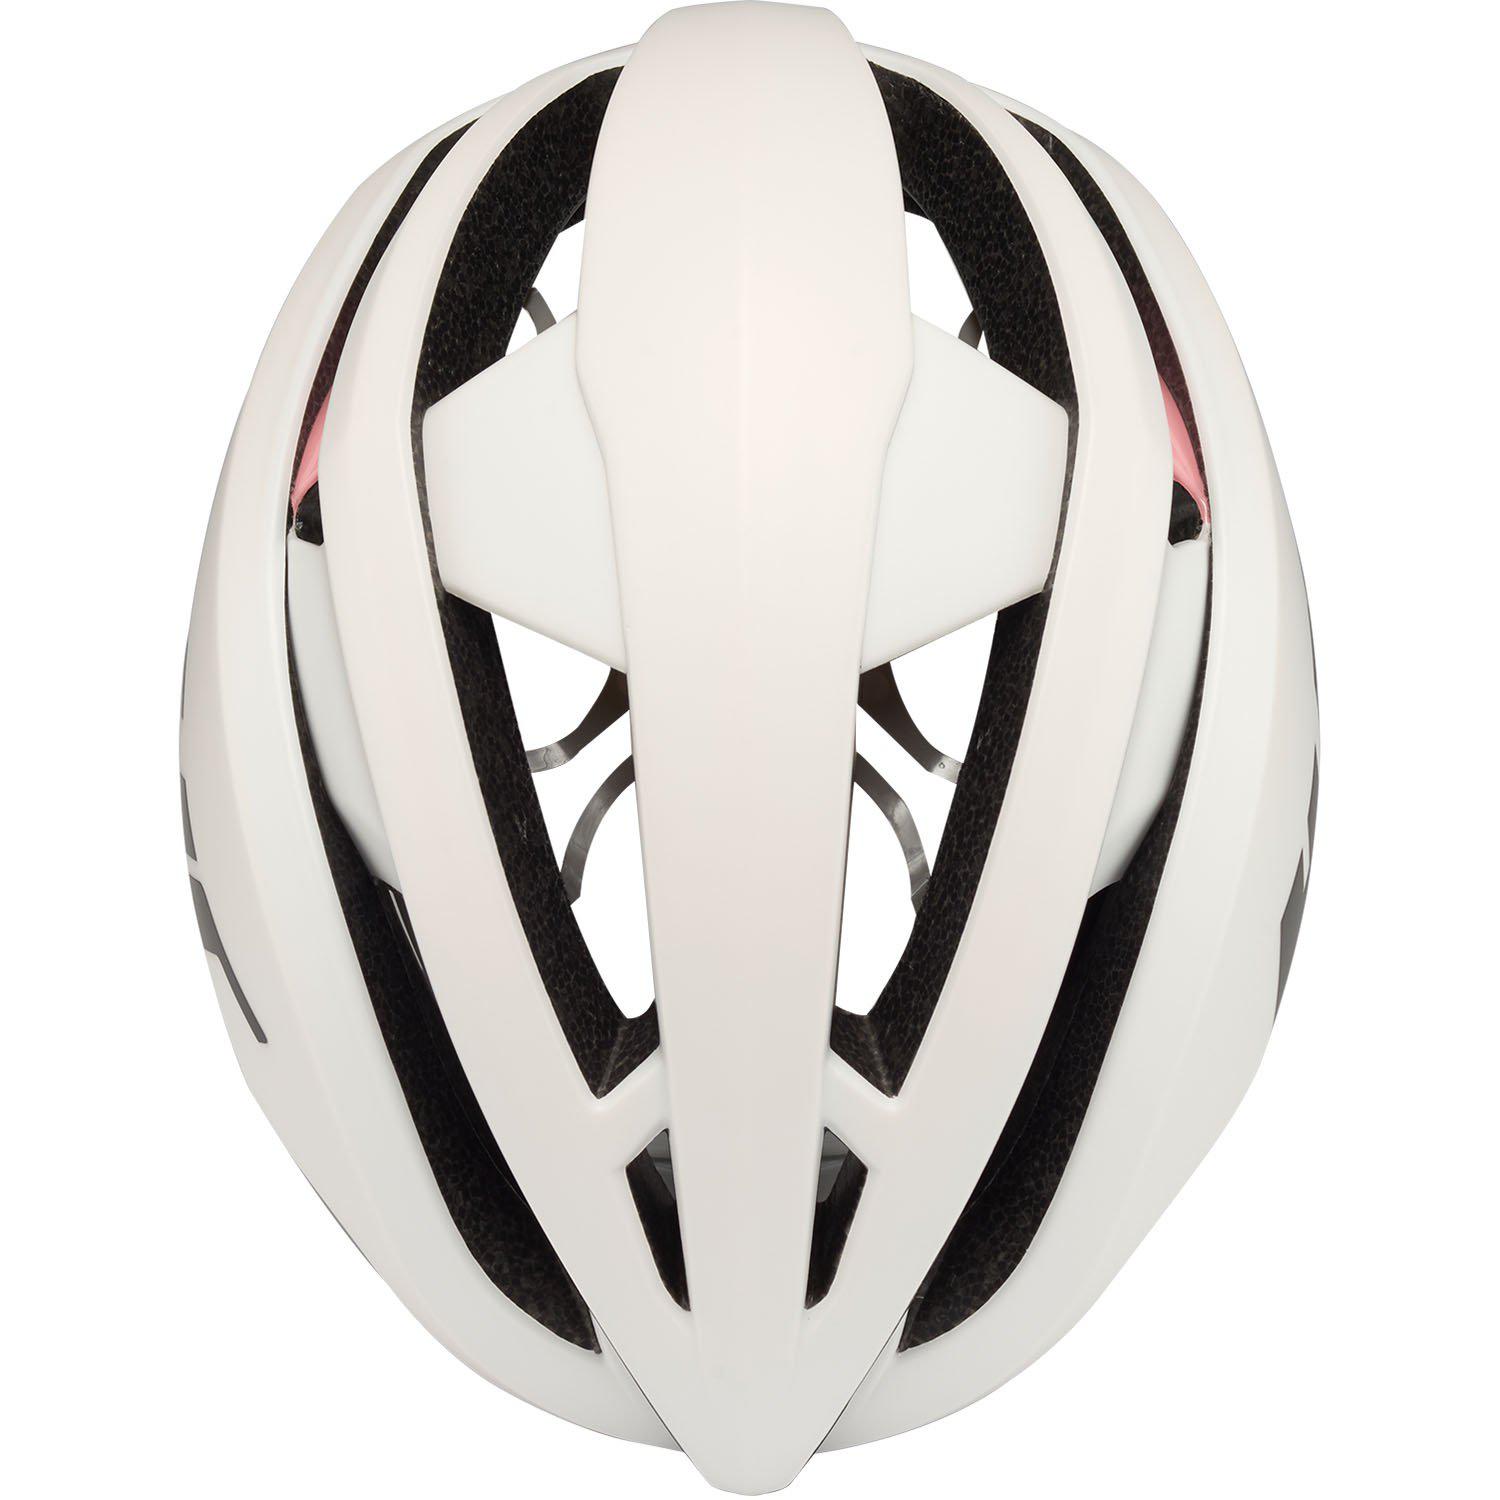 HJC-HJC Ibex 2.0 Road Cycling Helmet--saddleback-elite-performance-cycling